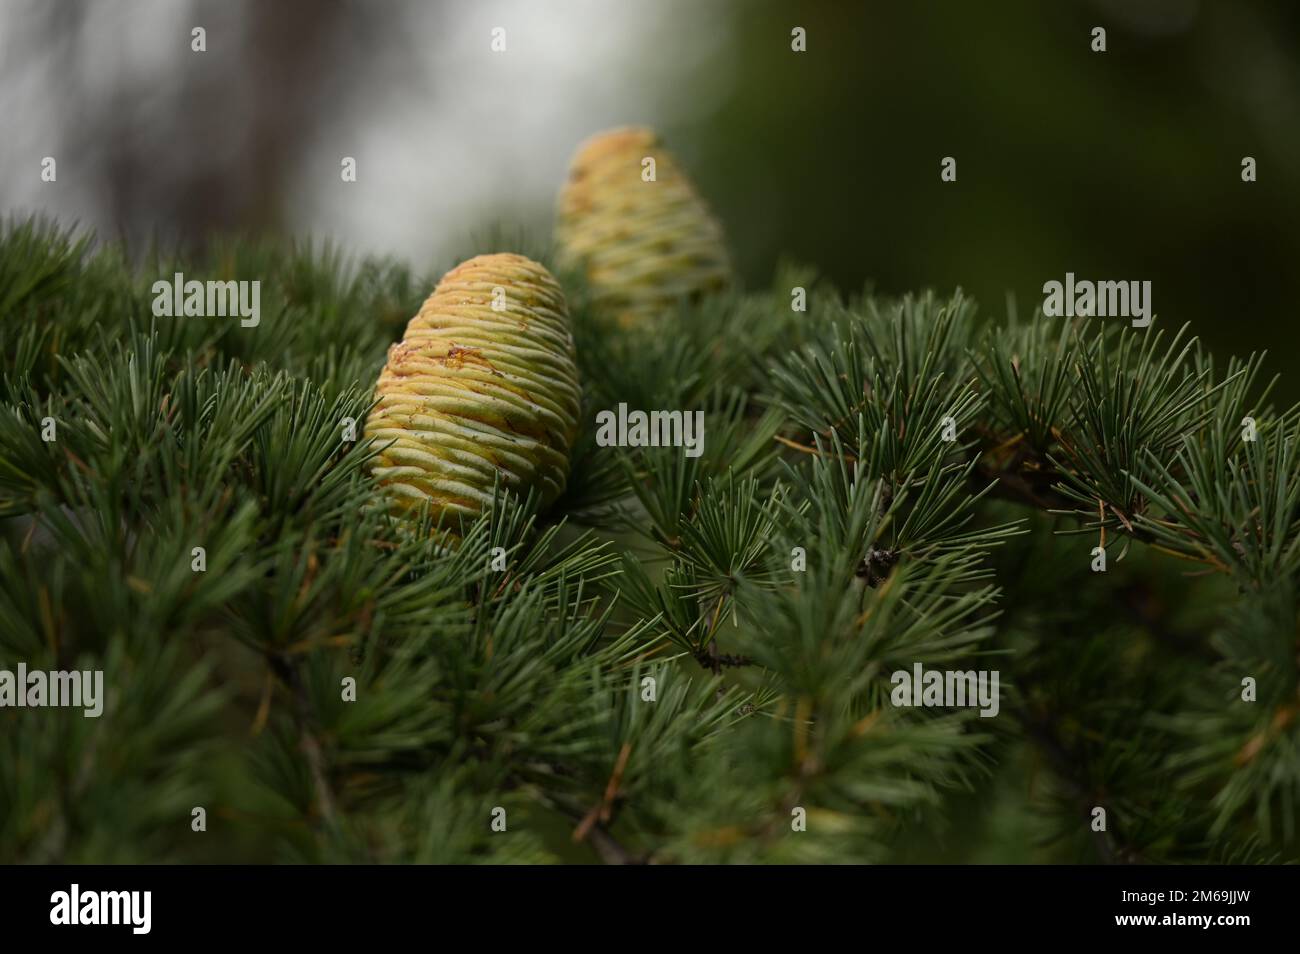 Himalayan cedar or deodar cedar tree with cones Stock Photo